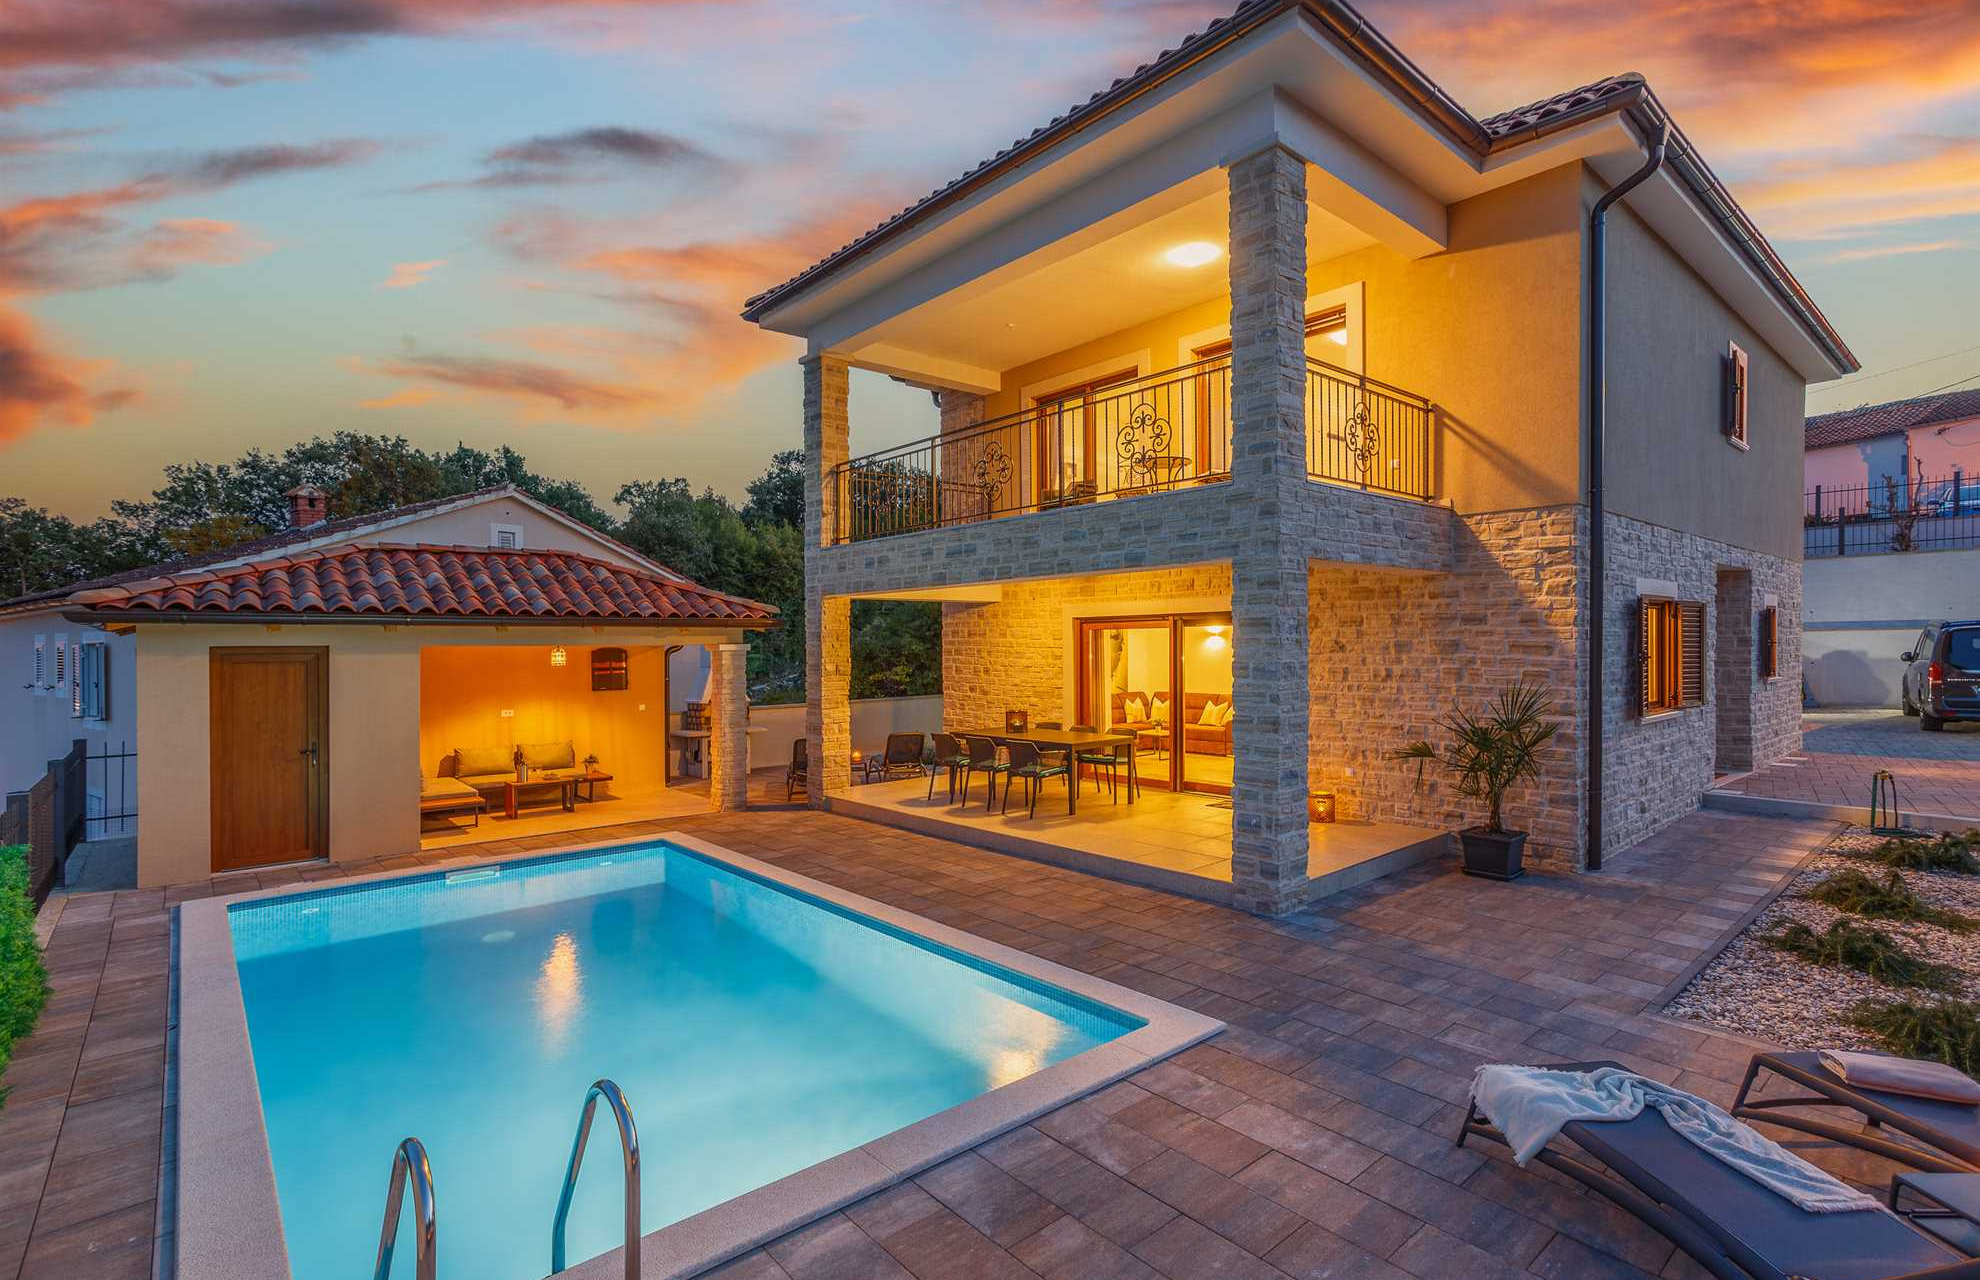 Villa Monica with a swimming pool.